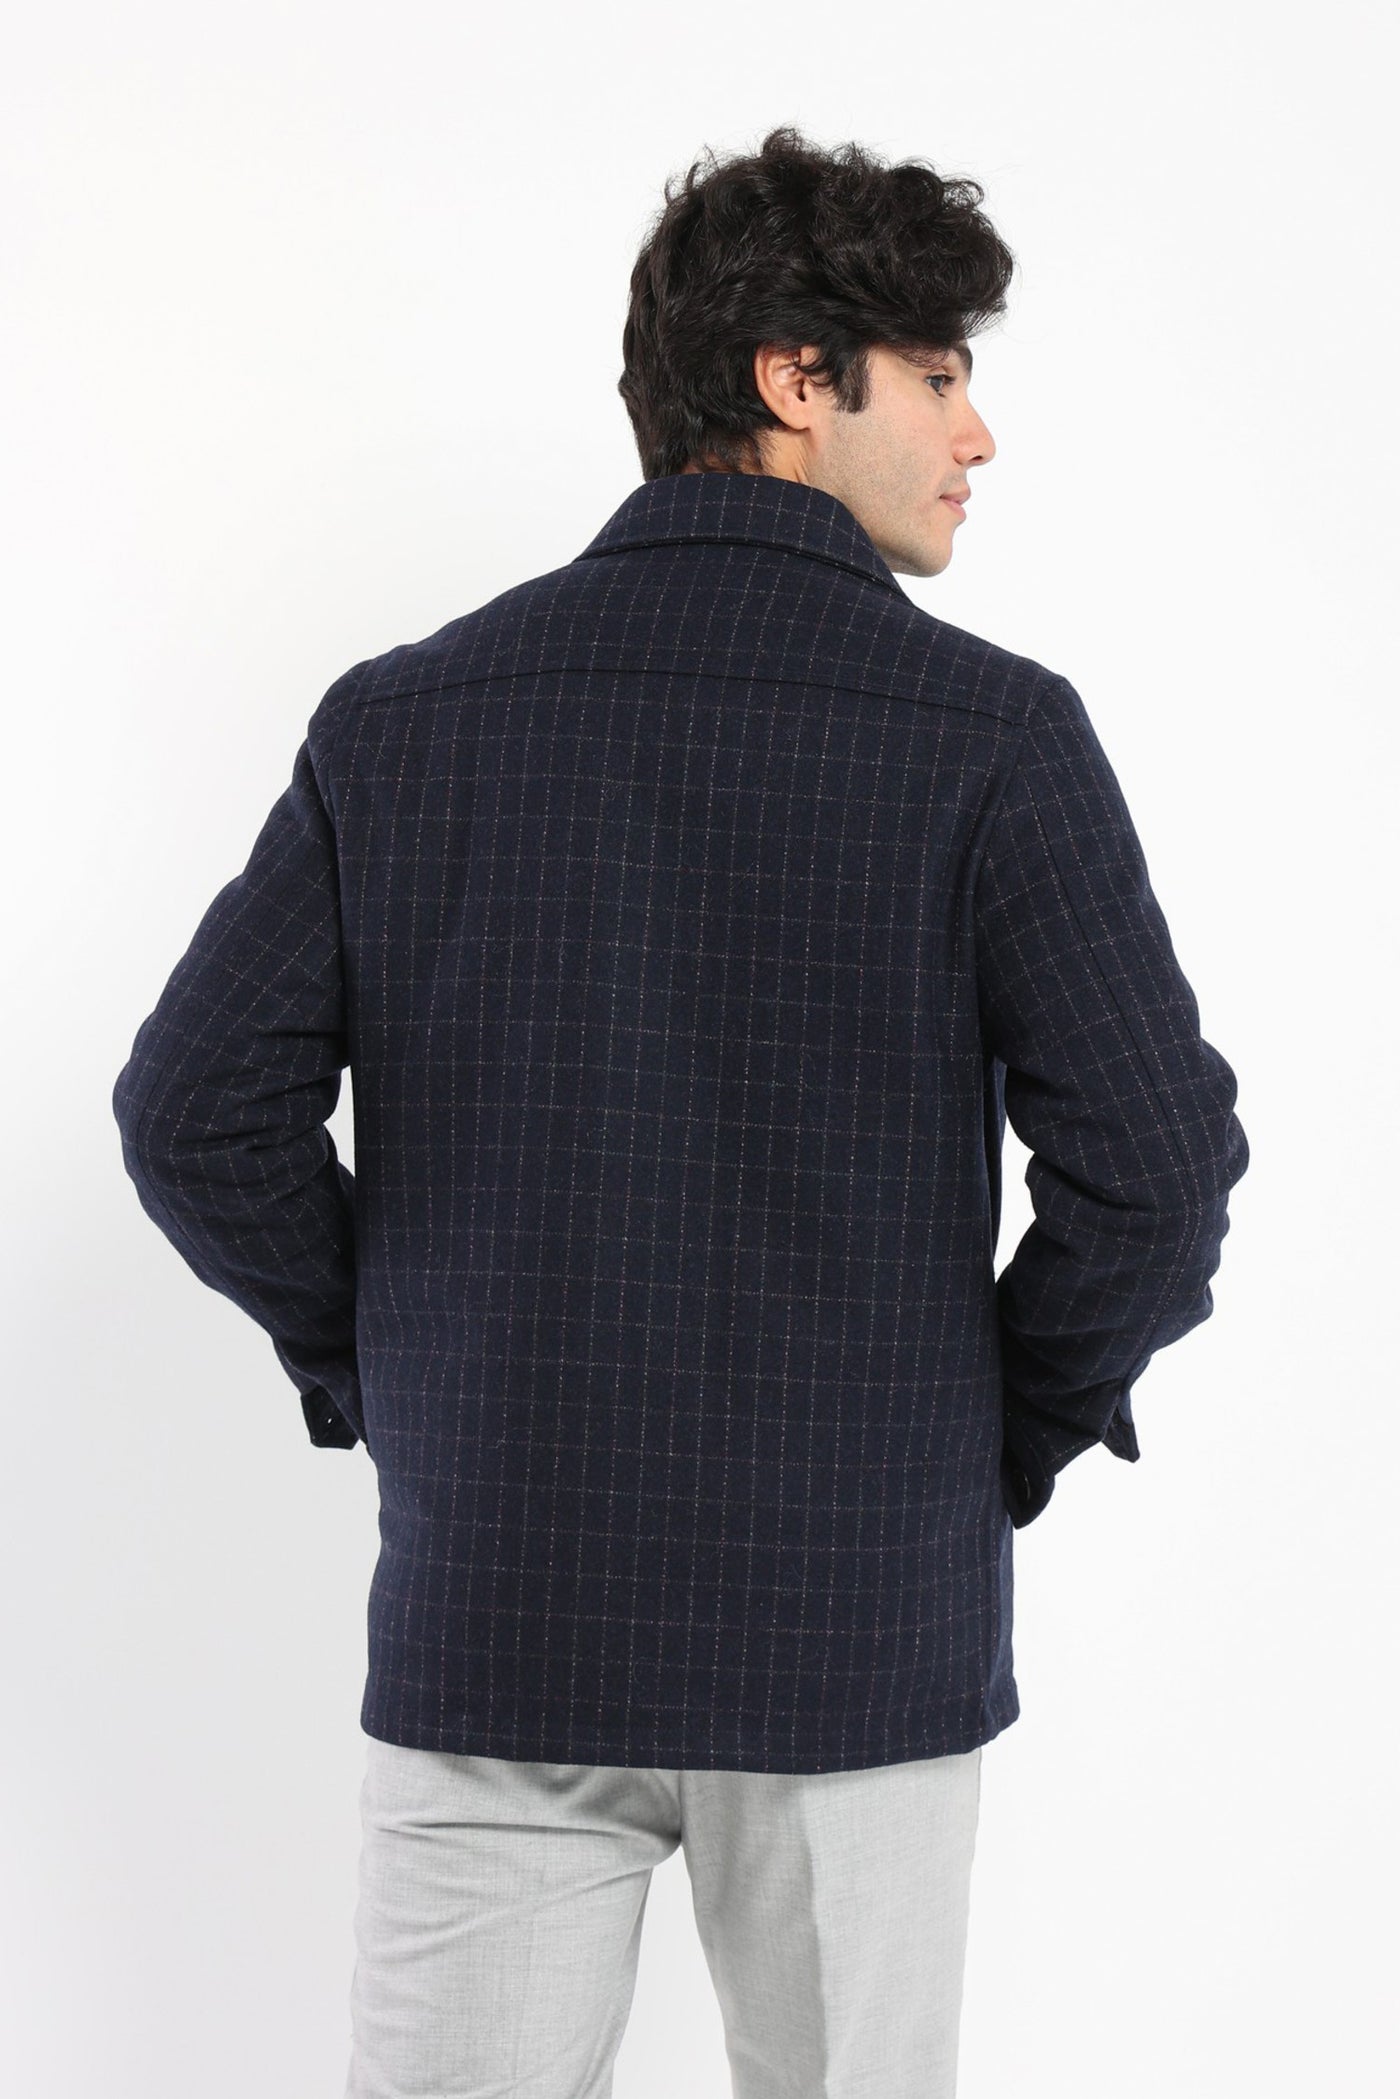 Overshirt Jacket - Checkered - Button Closure